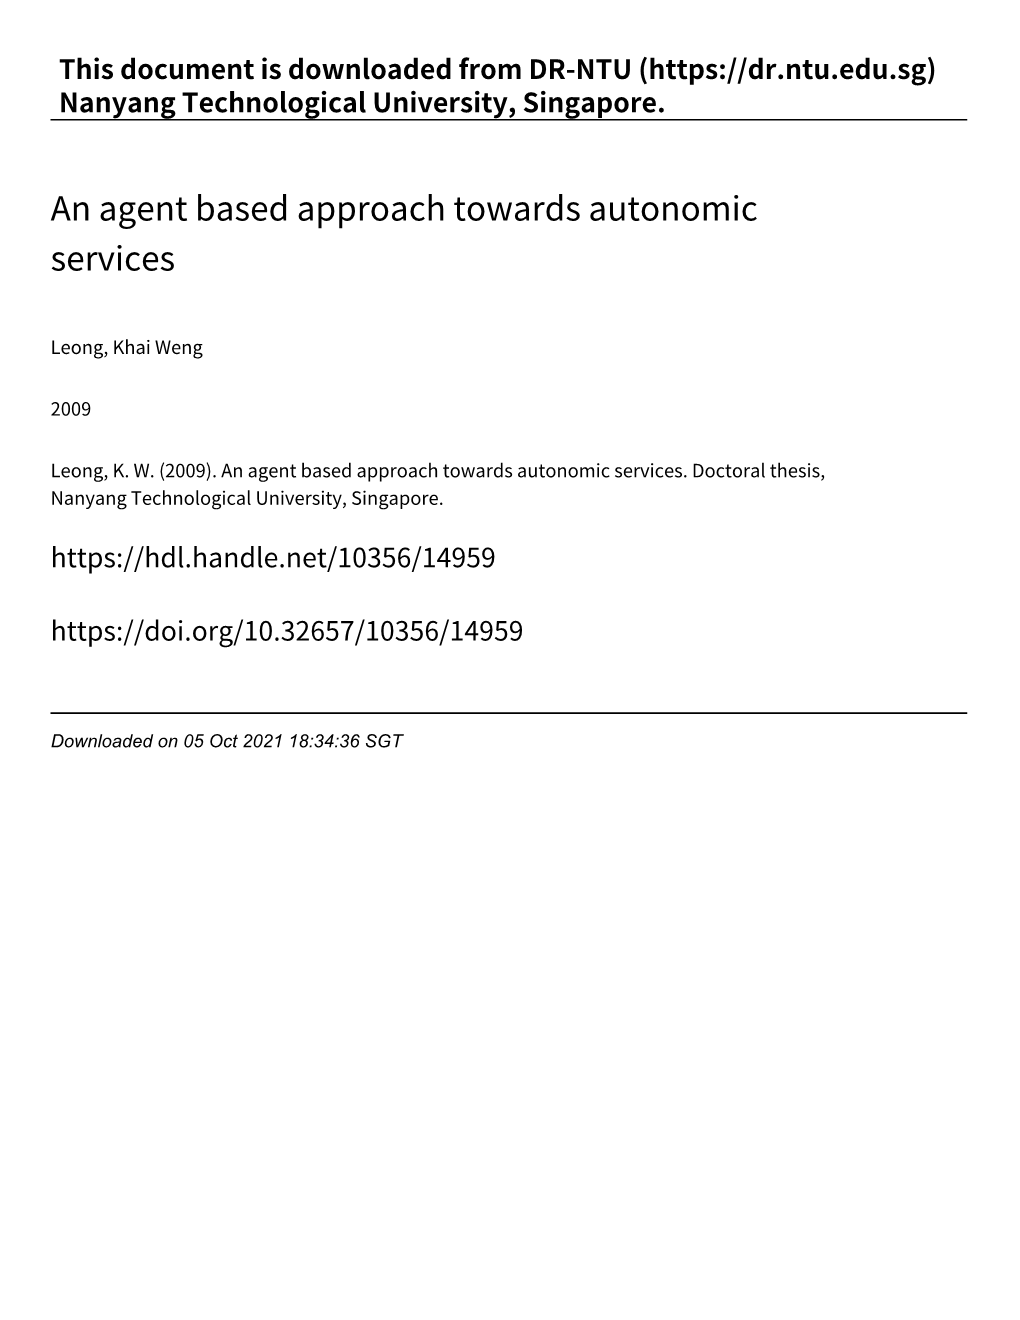 An Agent Based Approach Towards Autonomic Services